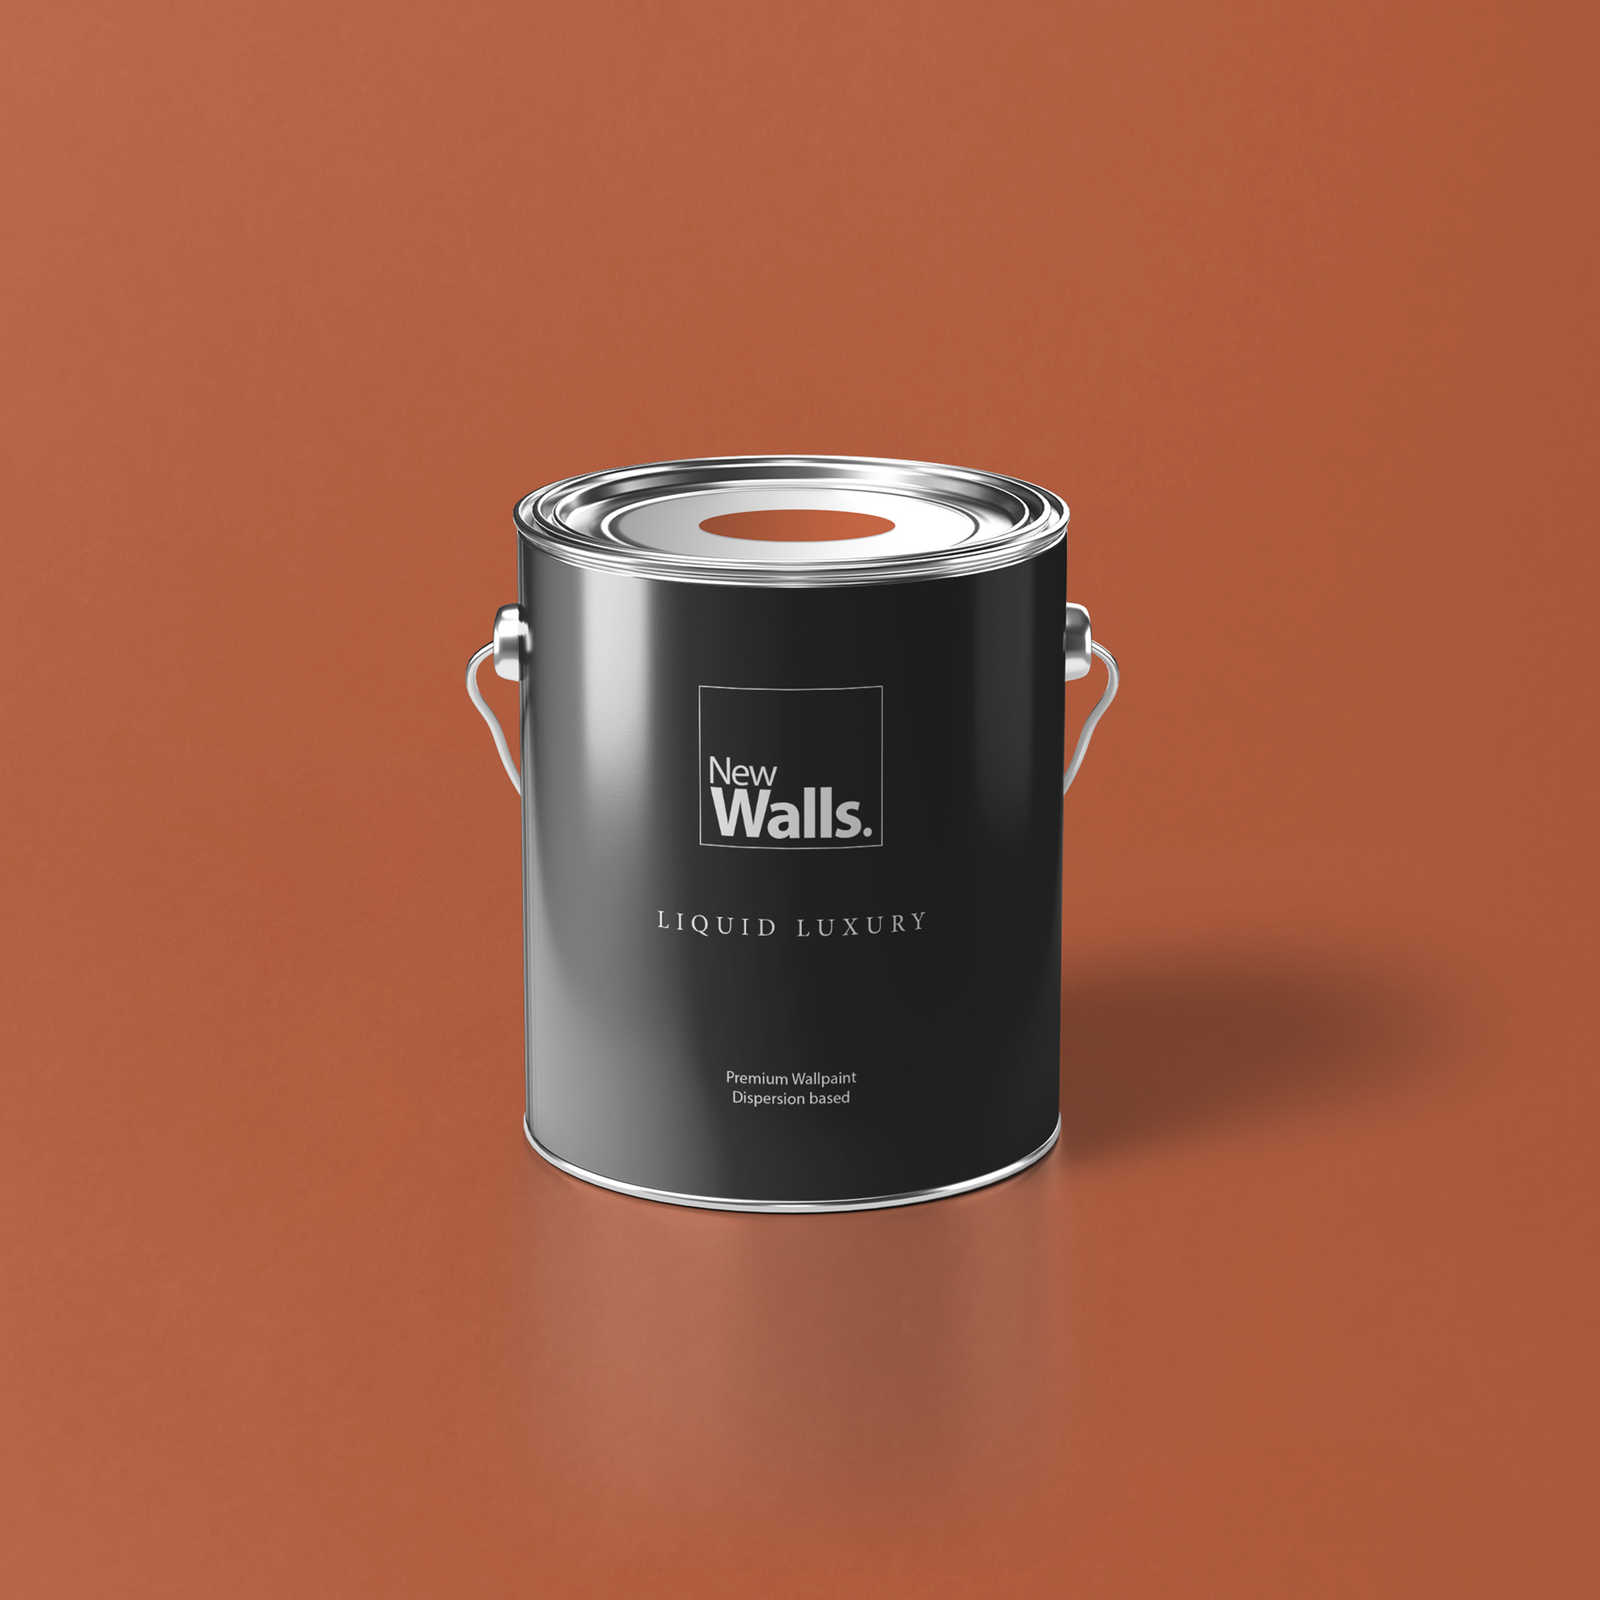 Premium Wall Paint Passionate Blood Orange »Pretty Peach« NW906 – 2.5 litre
